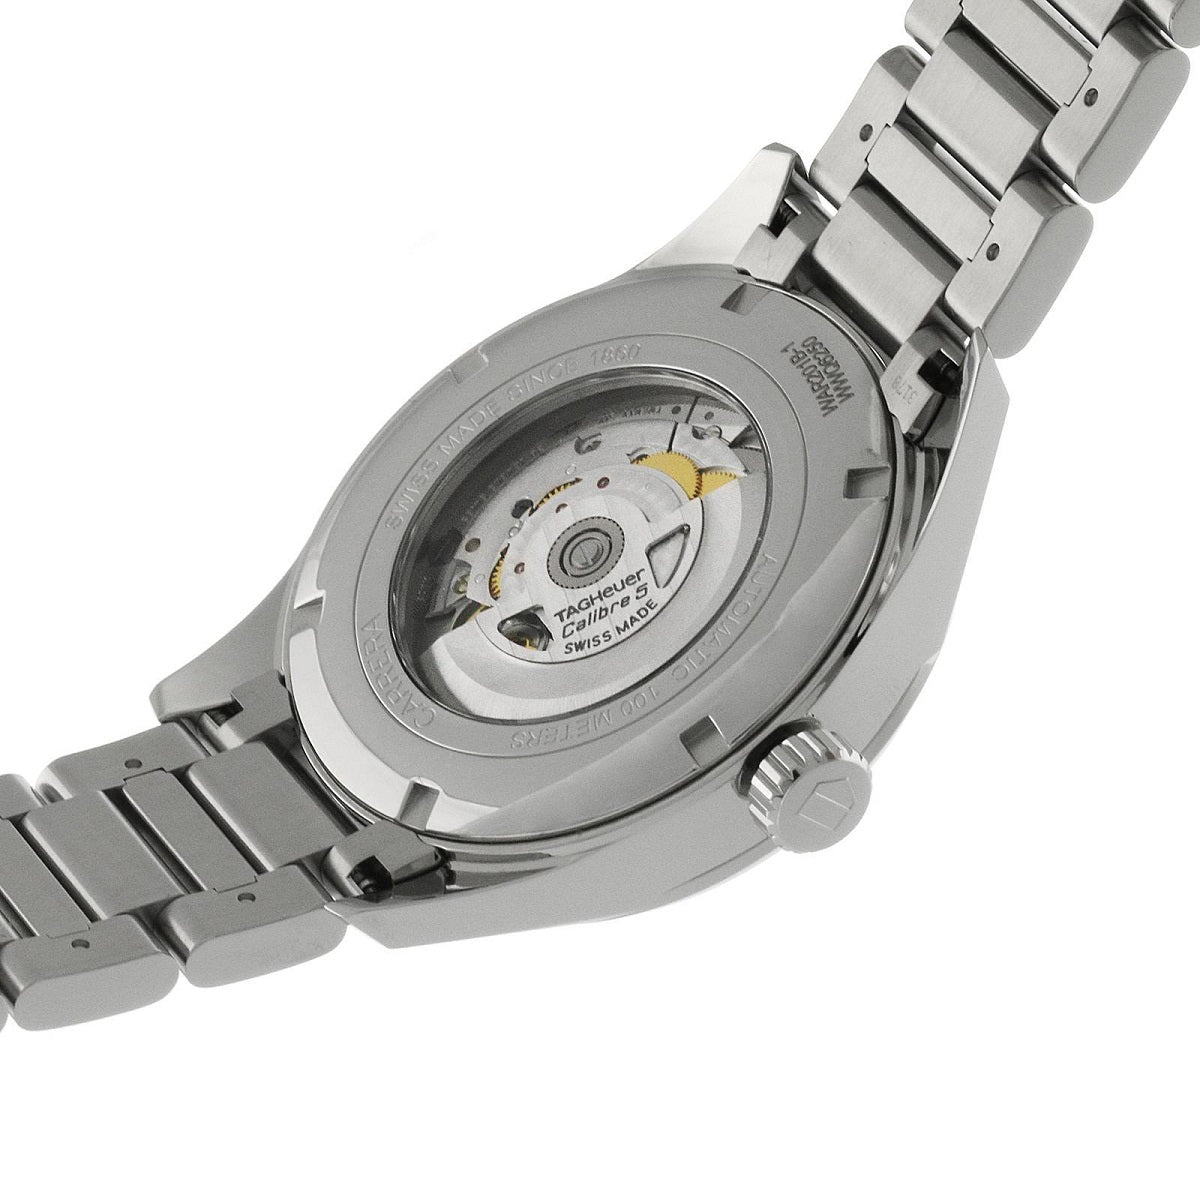 Tag Heuer Carrera Calibre 5 Day-Date Automatic Grey Dial Steel Men's Watch - WAR201B.BA0723